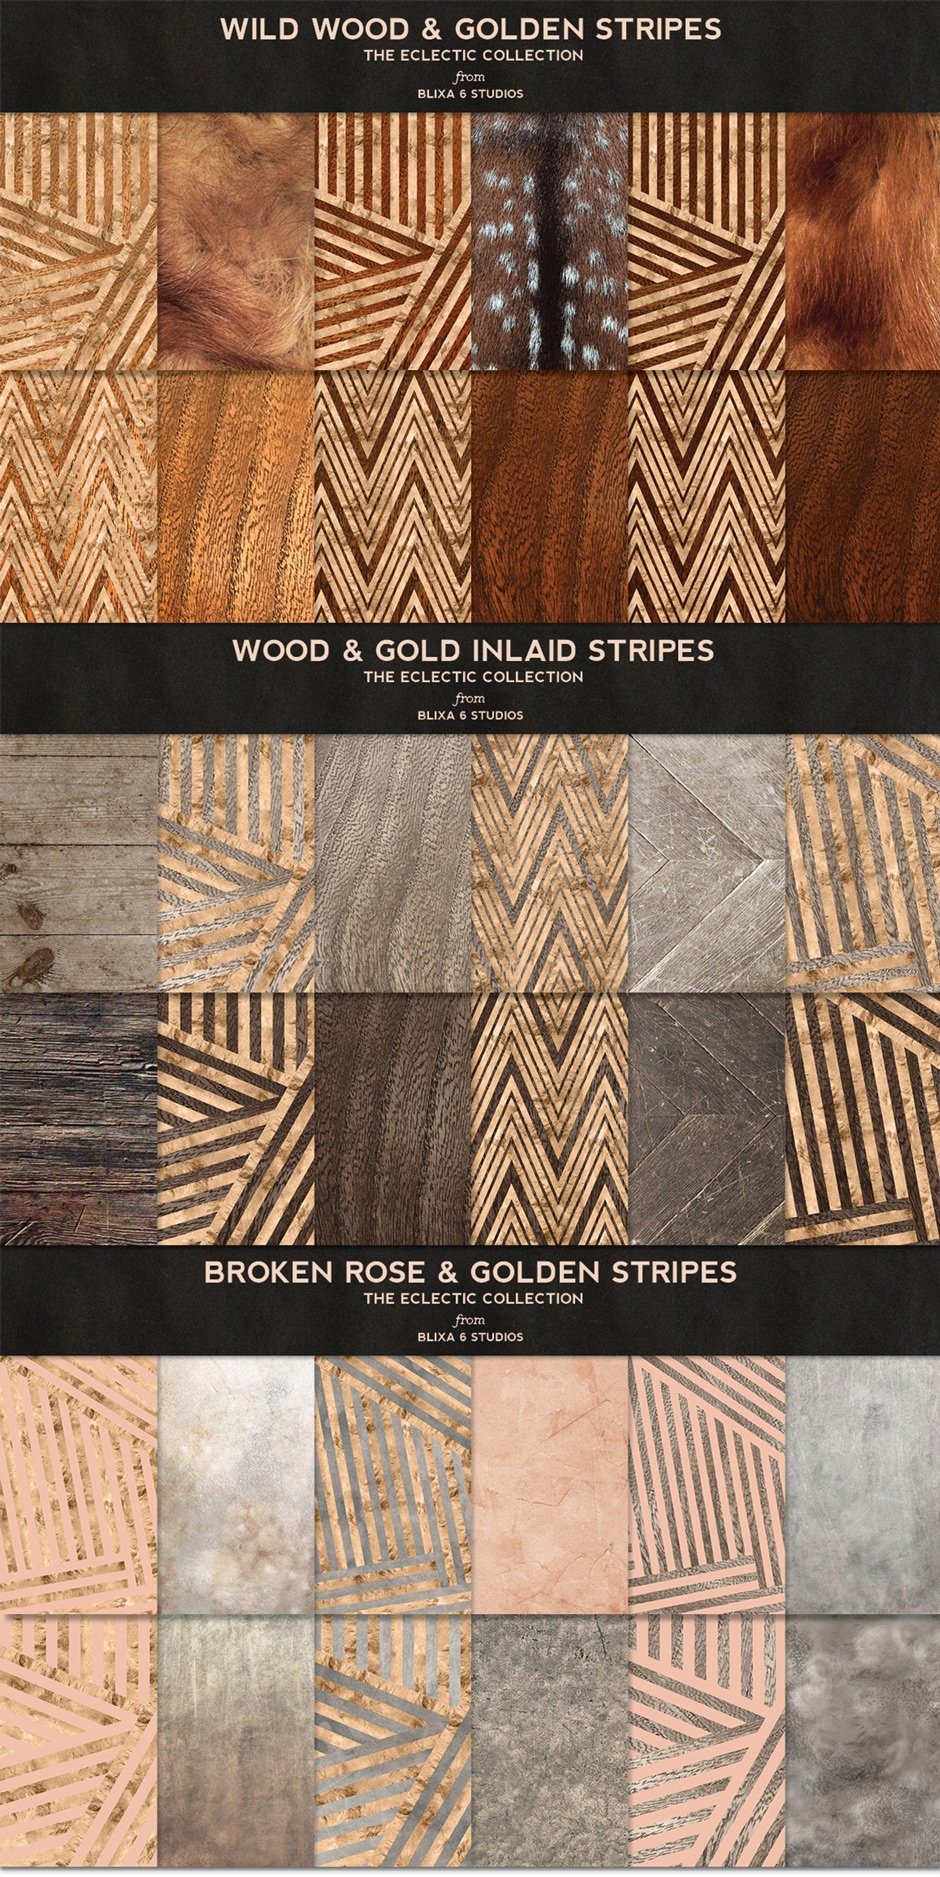 36 Broken Stripes in Gold & Wood